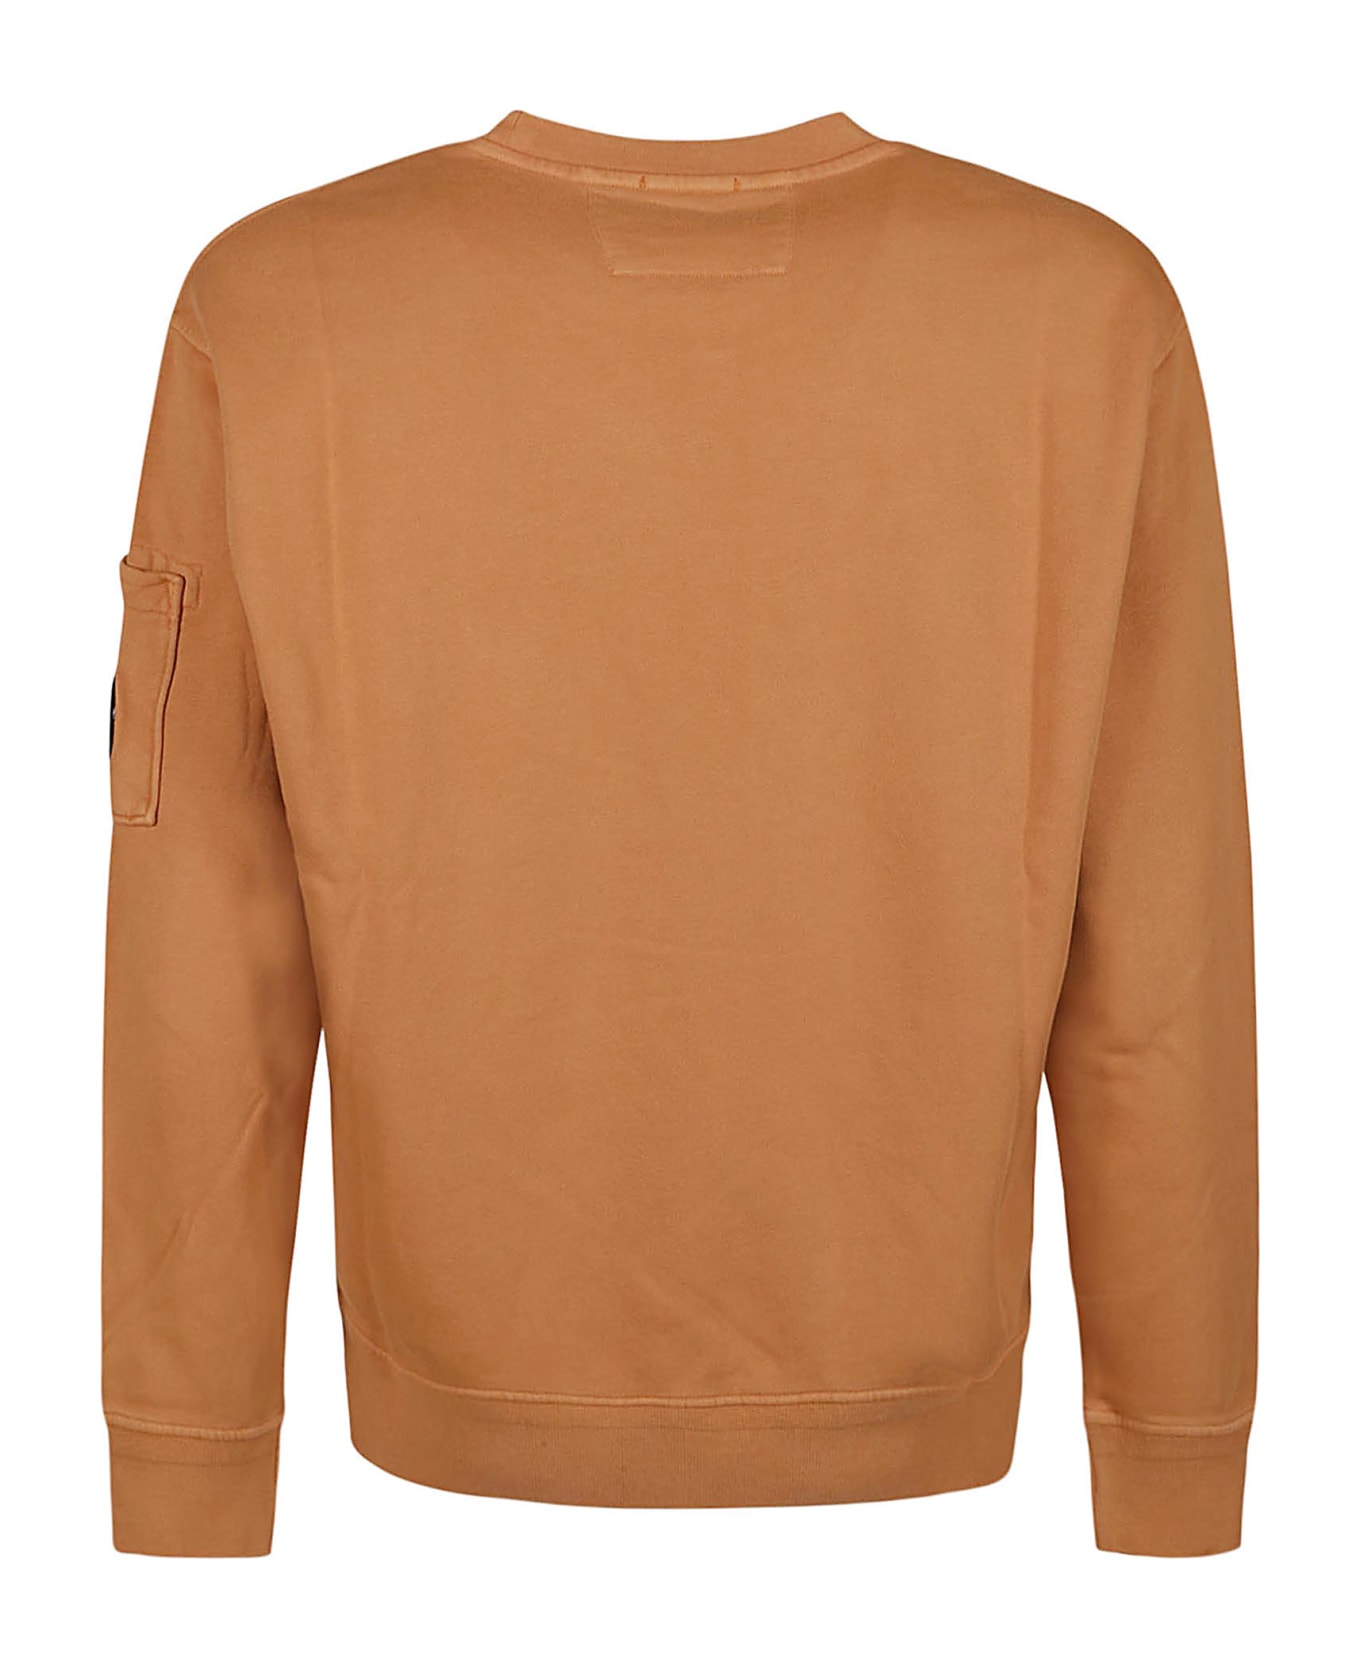 C.P. Company Diagonal Fleece Sweatshirt - PASTRY SHELL フリース